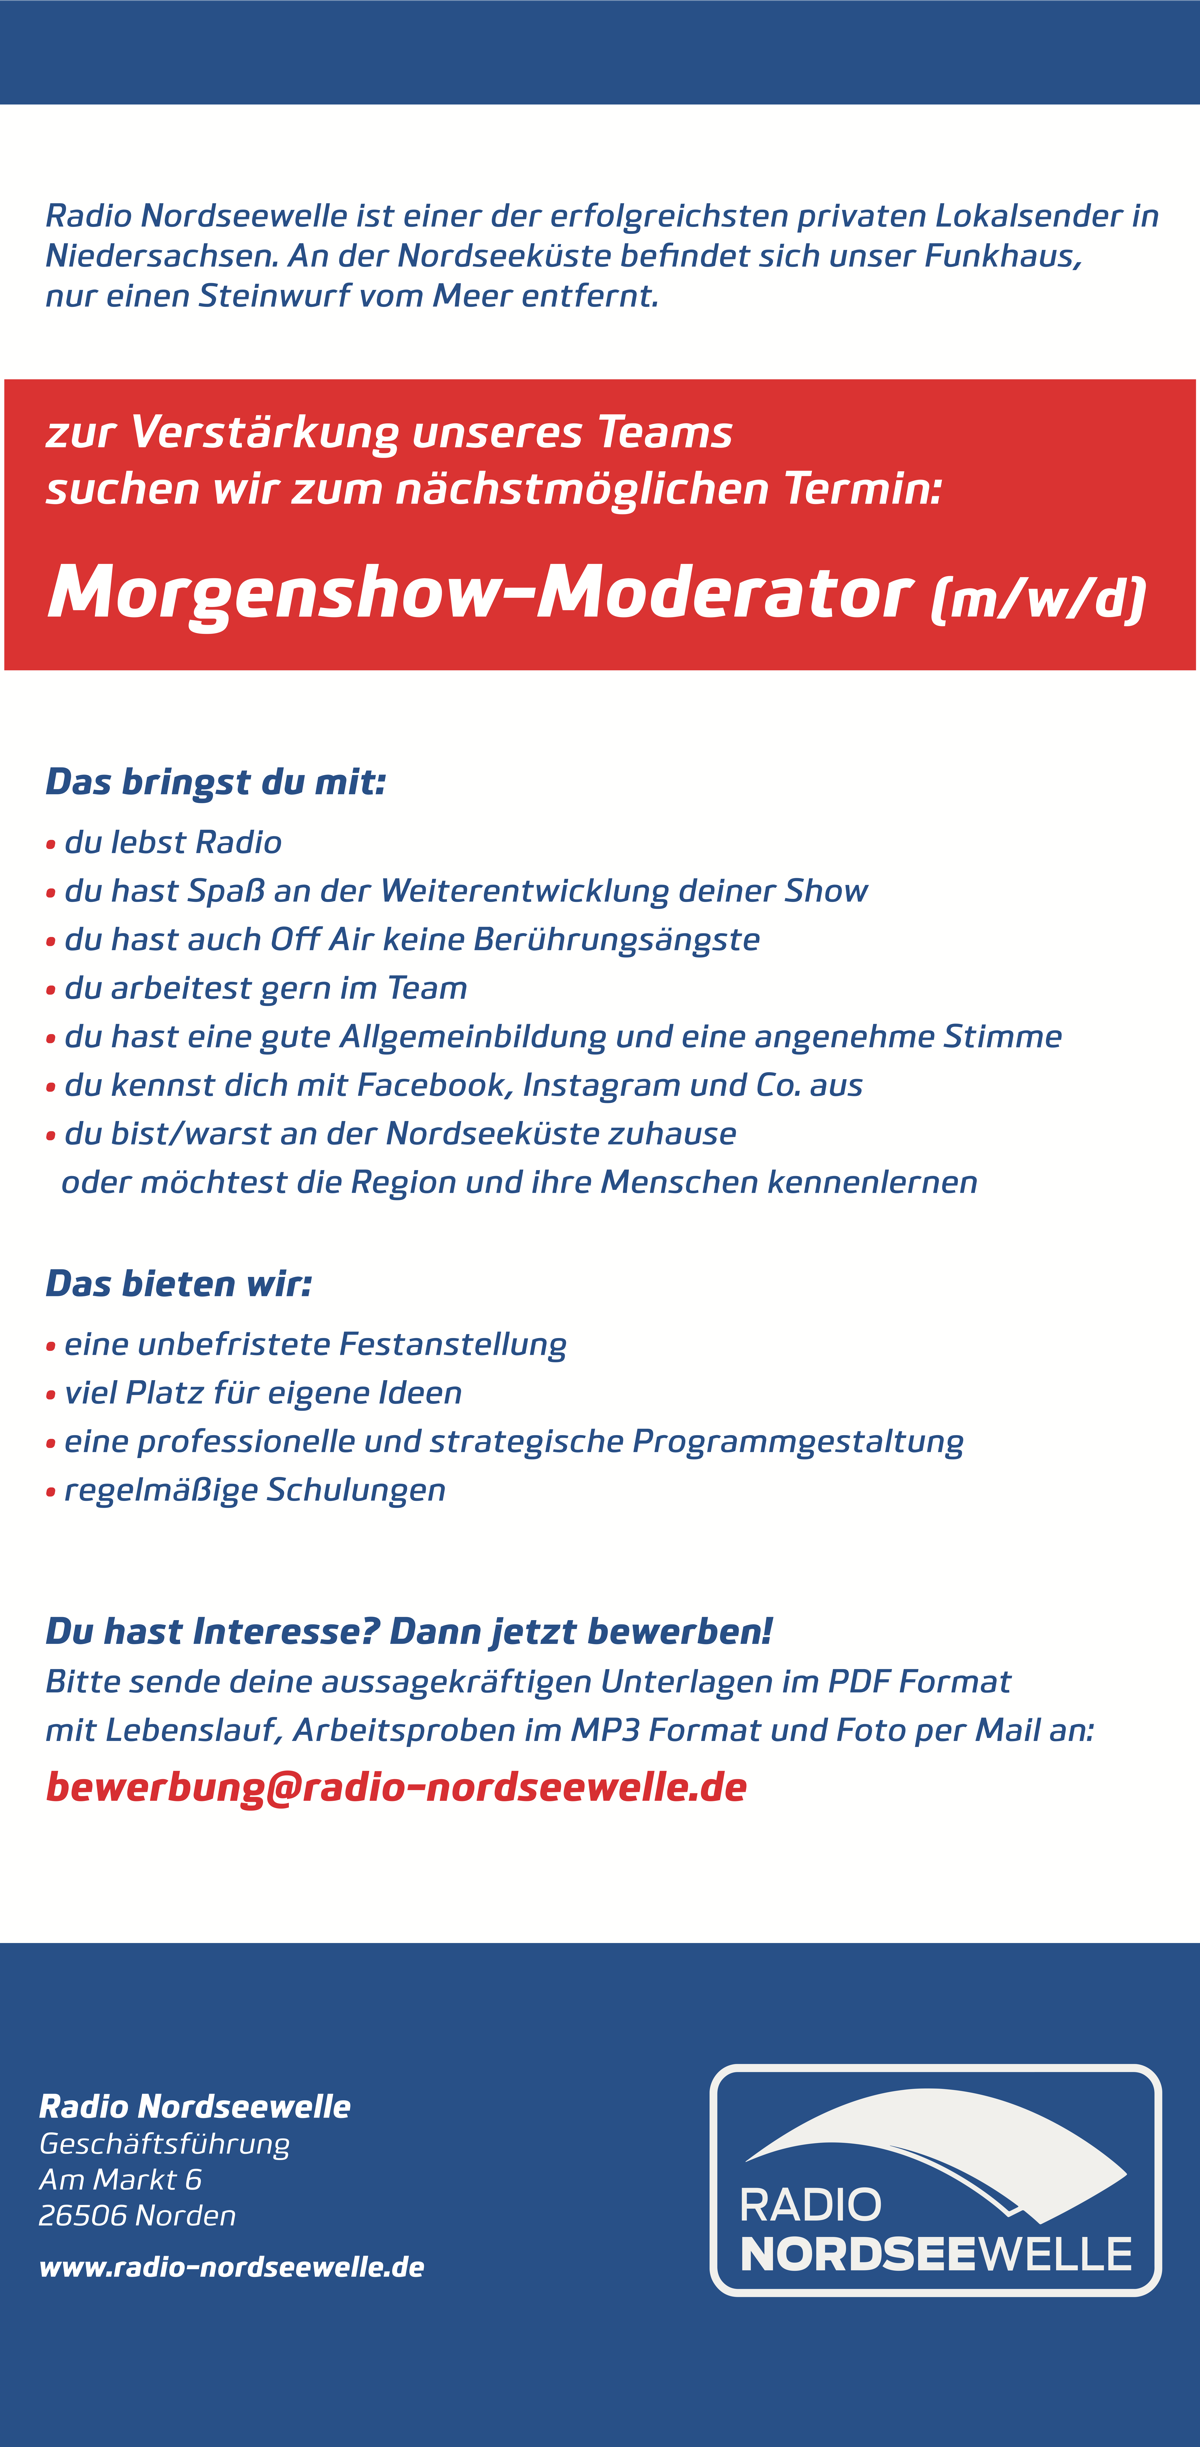 Radio Nordseewelle sucht Morgenshow-Moderator (m/w/d)